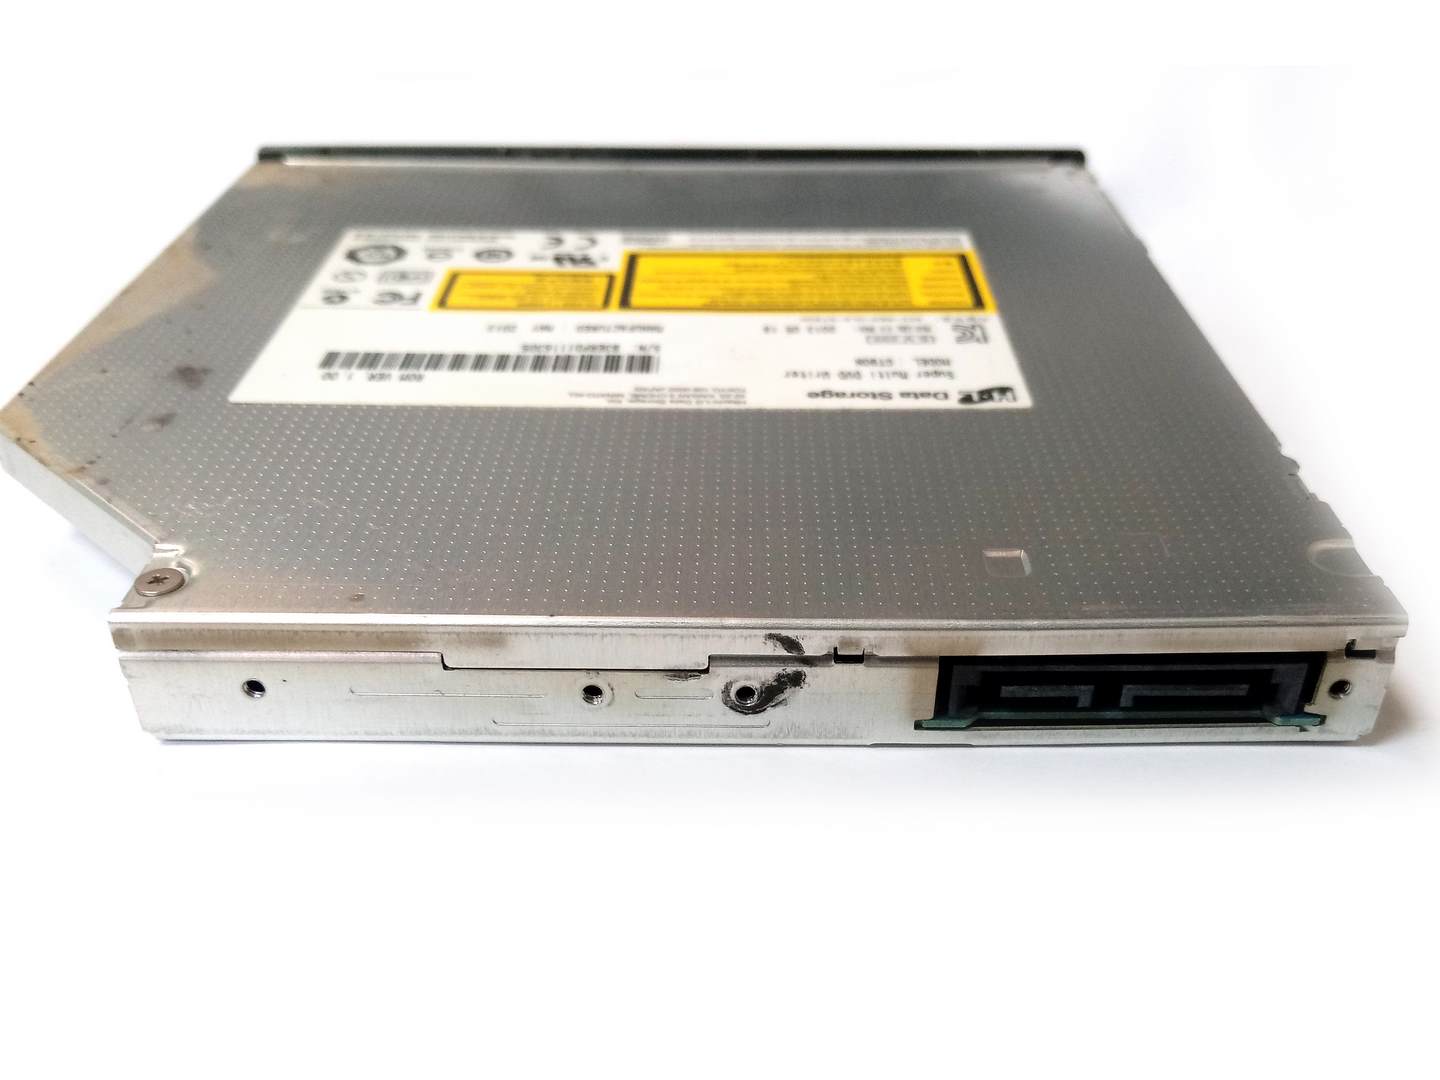 Оптический привод DVD-RW для ноутбука DNS A15FD GT90N